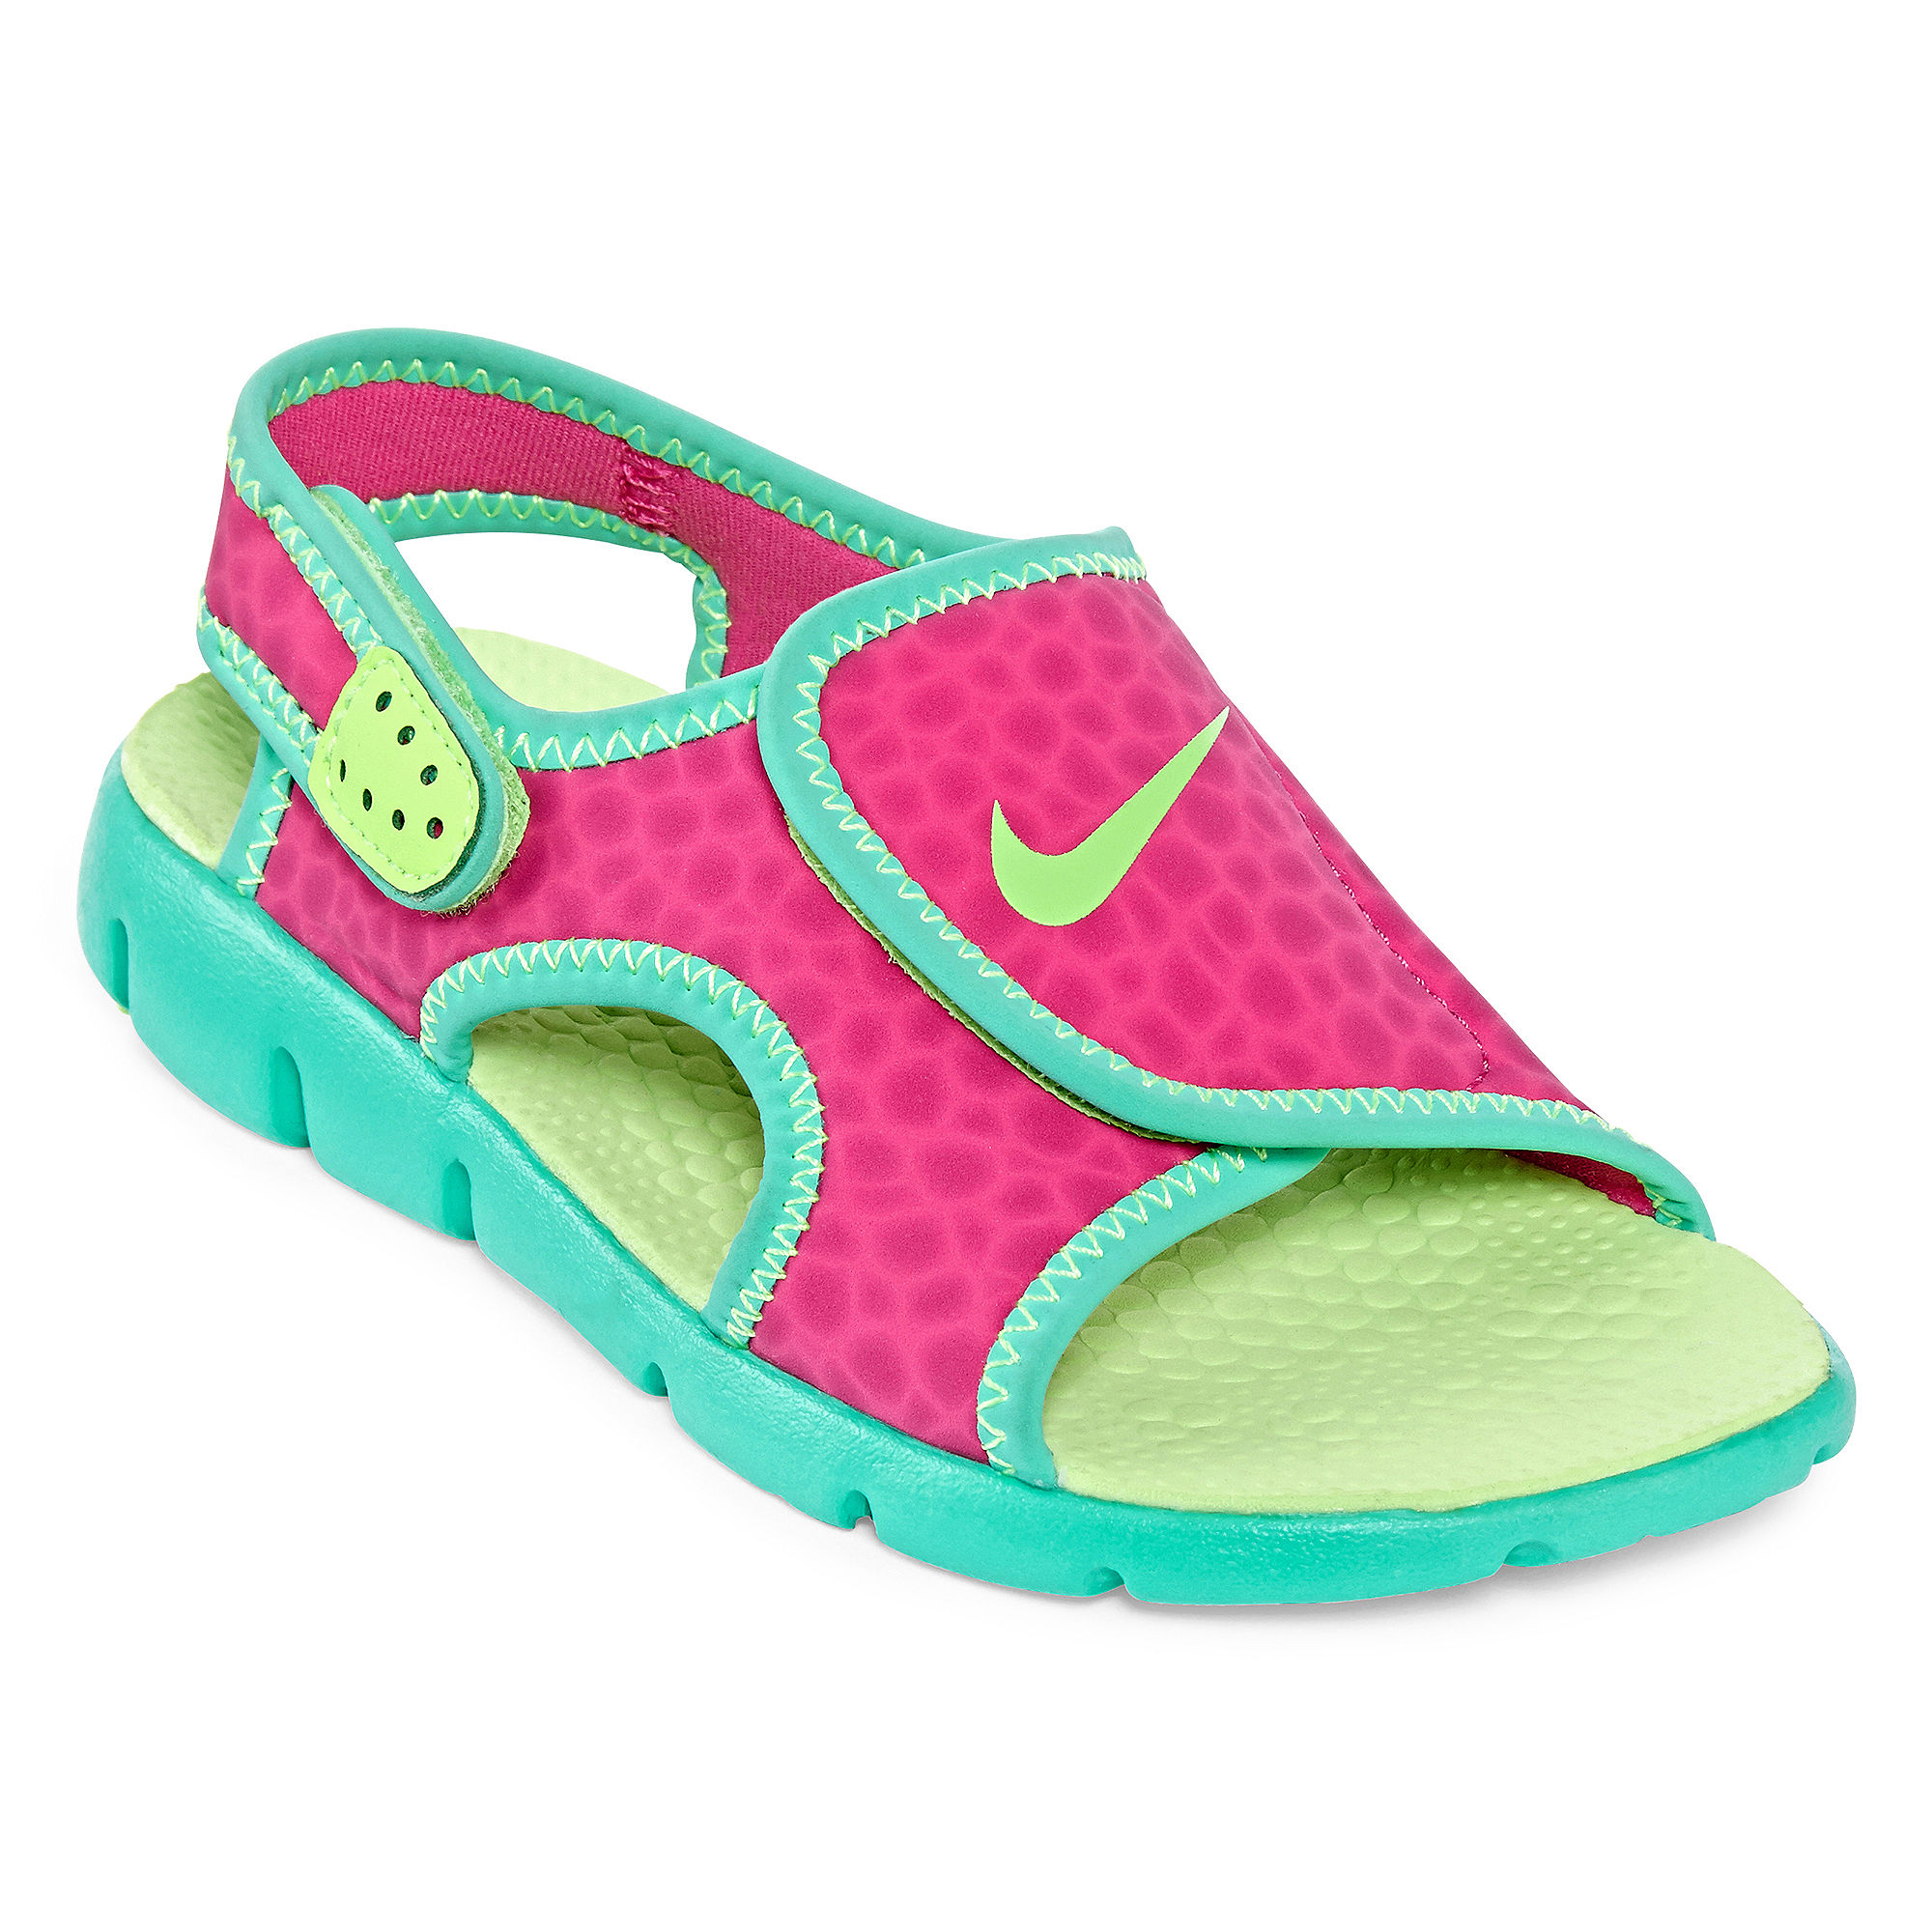 UPC 685068727726 product image for Nike Sunray Adjustable Girls Sandals - Little Kids | upcitemdb.com